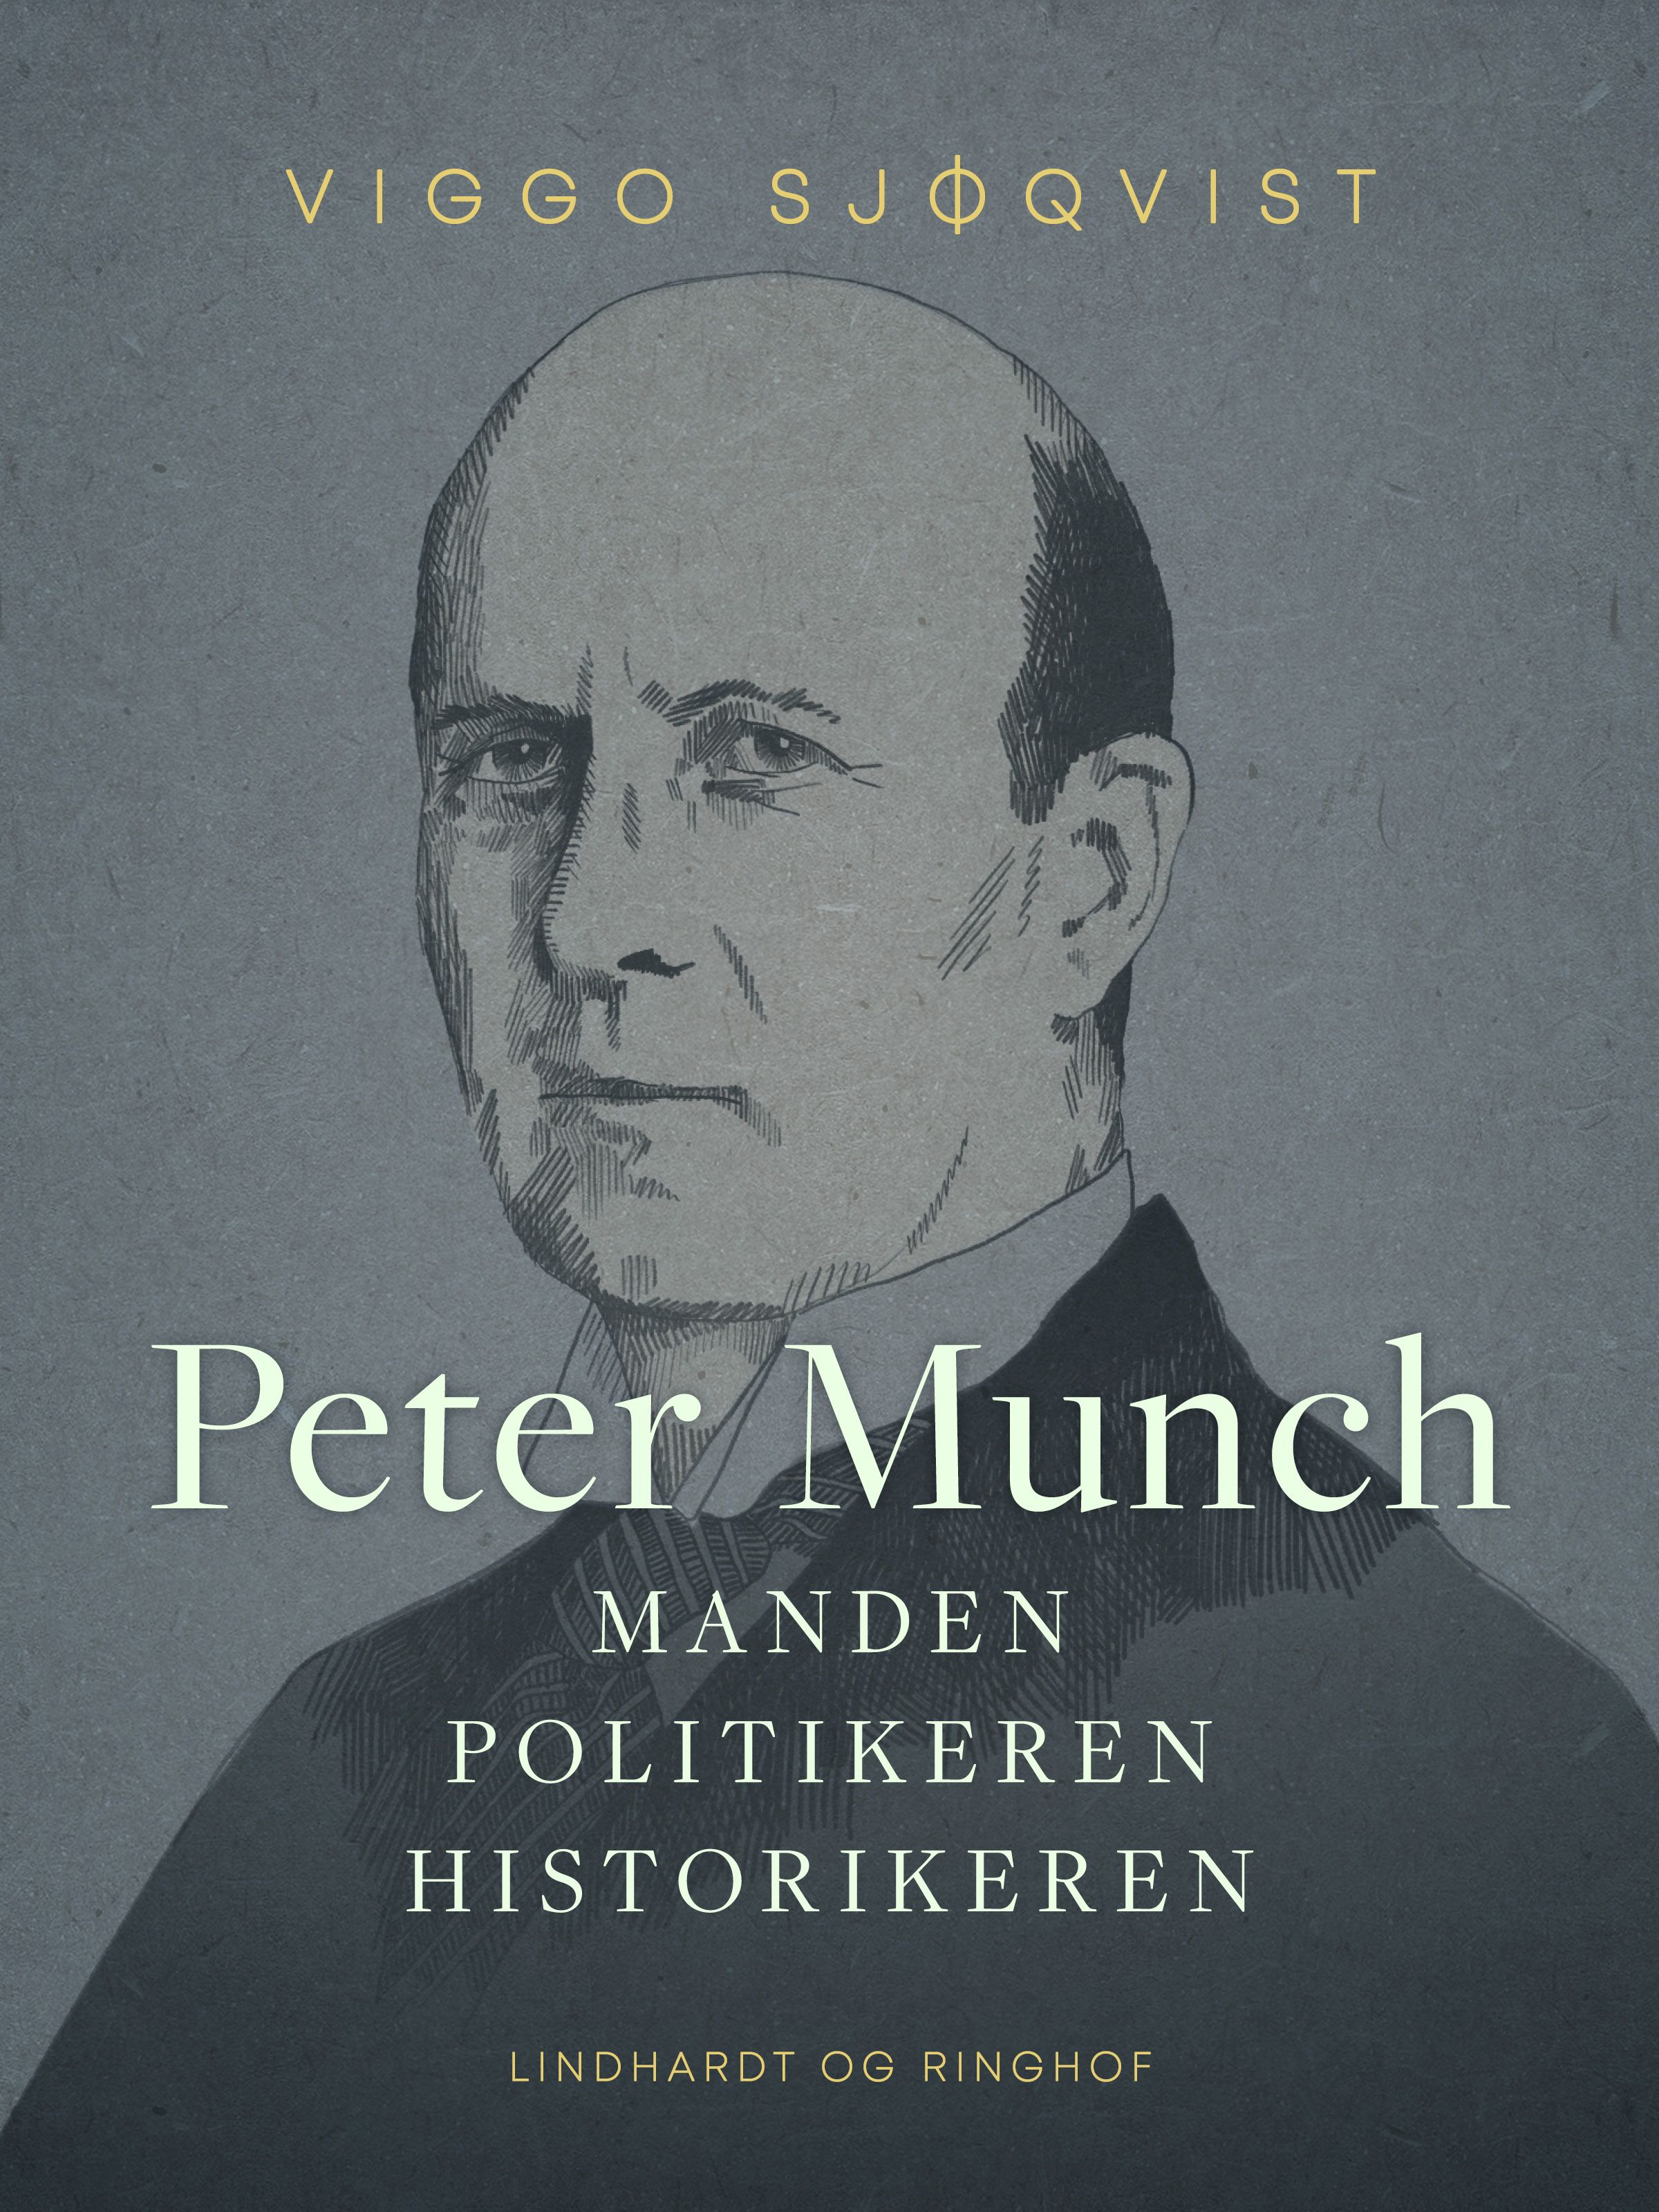 Peter Munch. Manden, politikeren, historikeren, e-bog af Viggo Sjøqvist